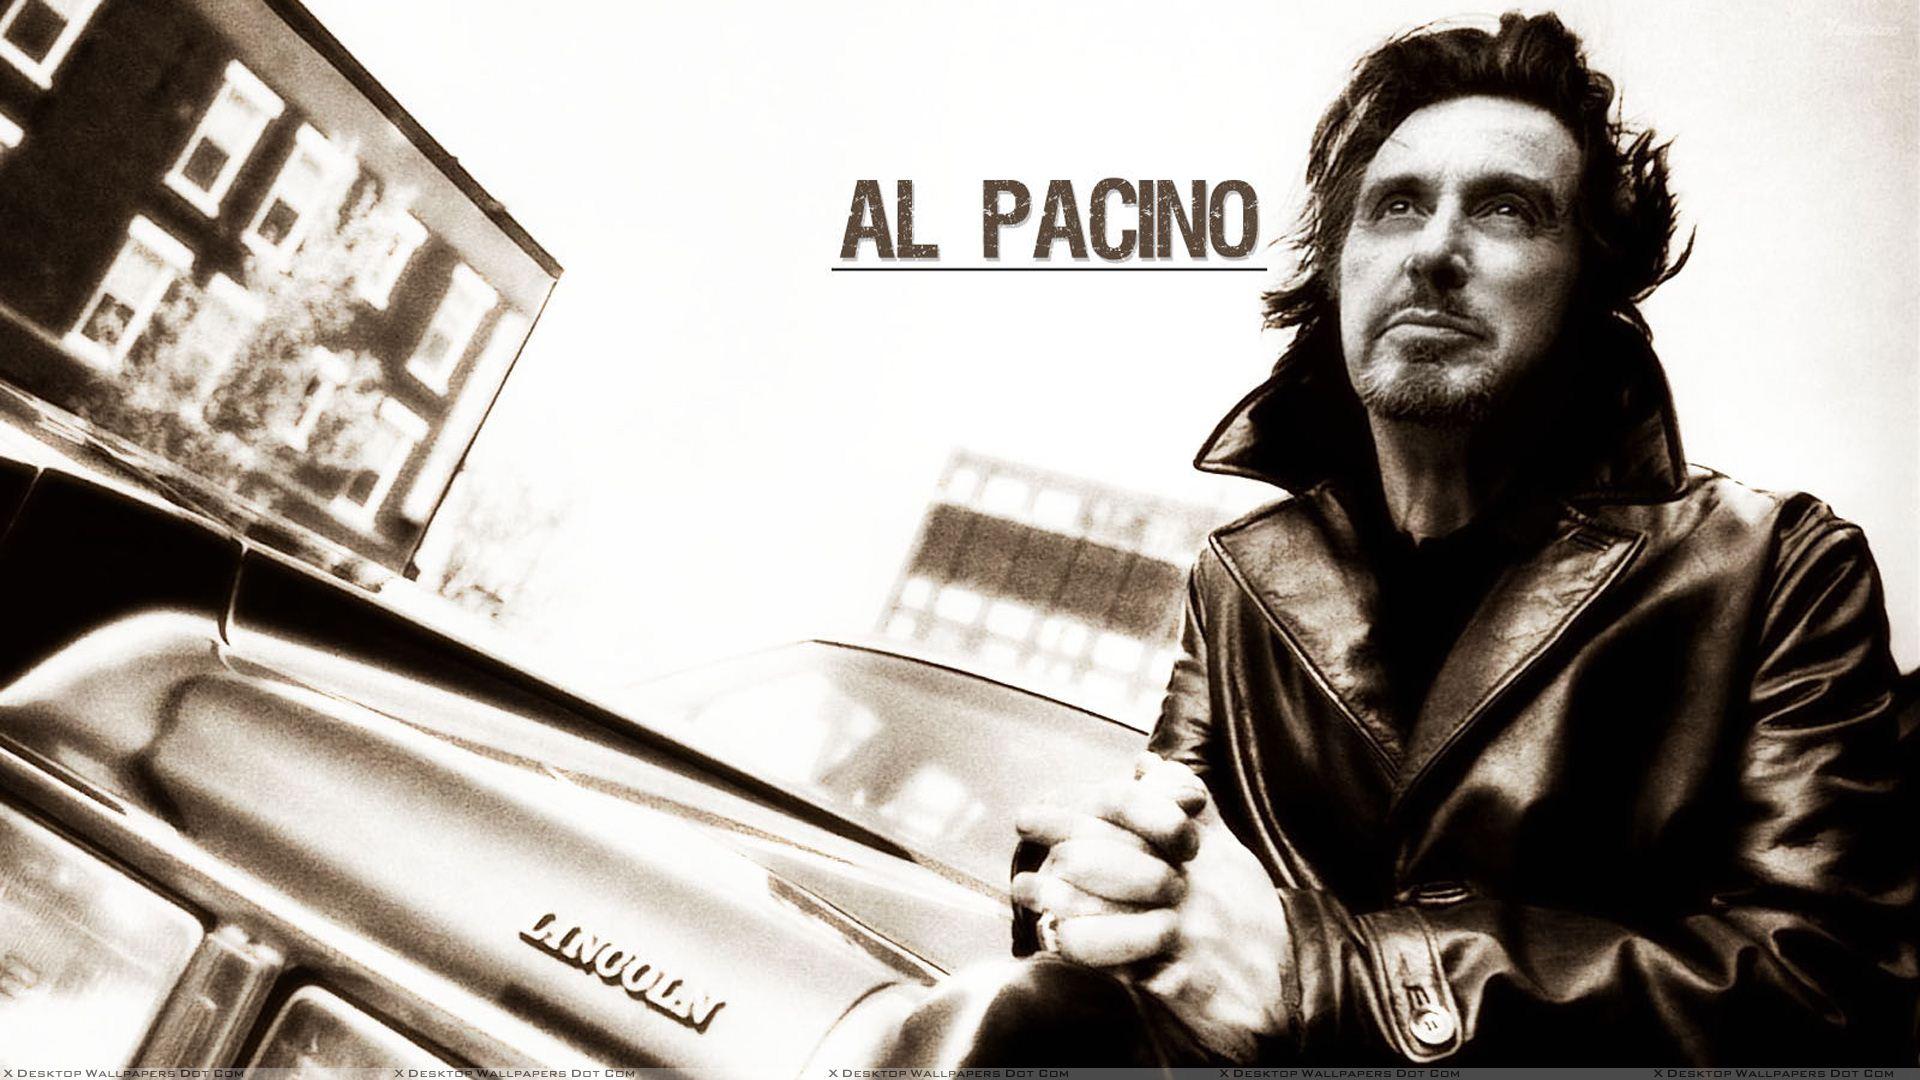 Al Pacino Wallpaper, Photo & Image in HD